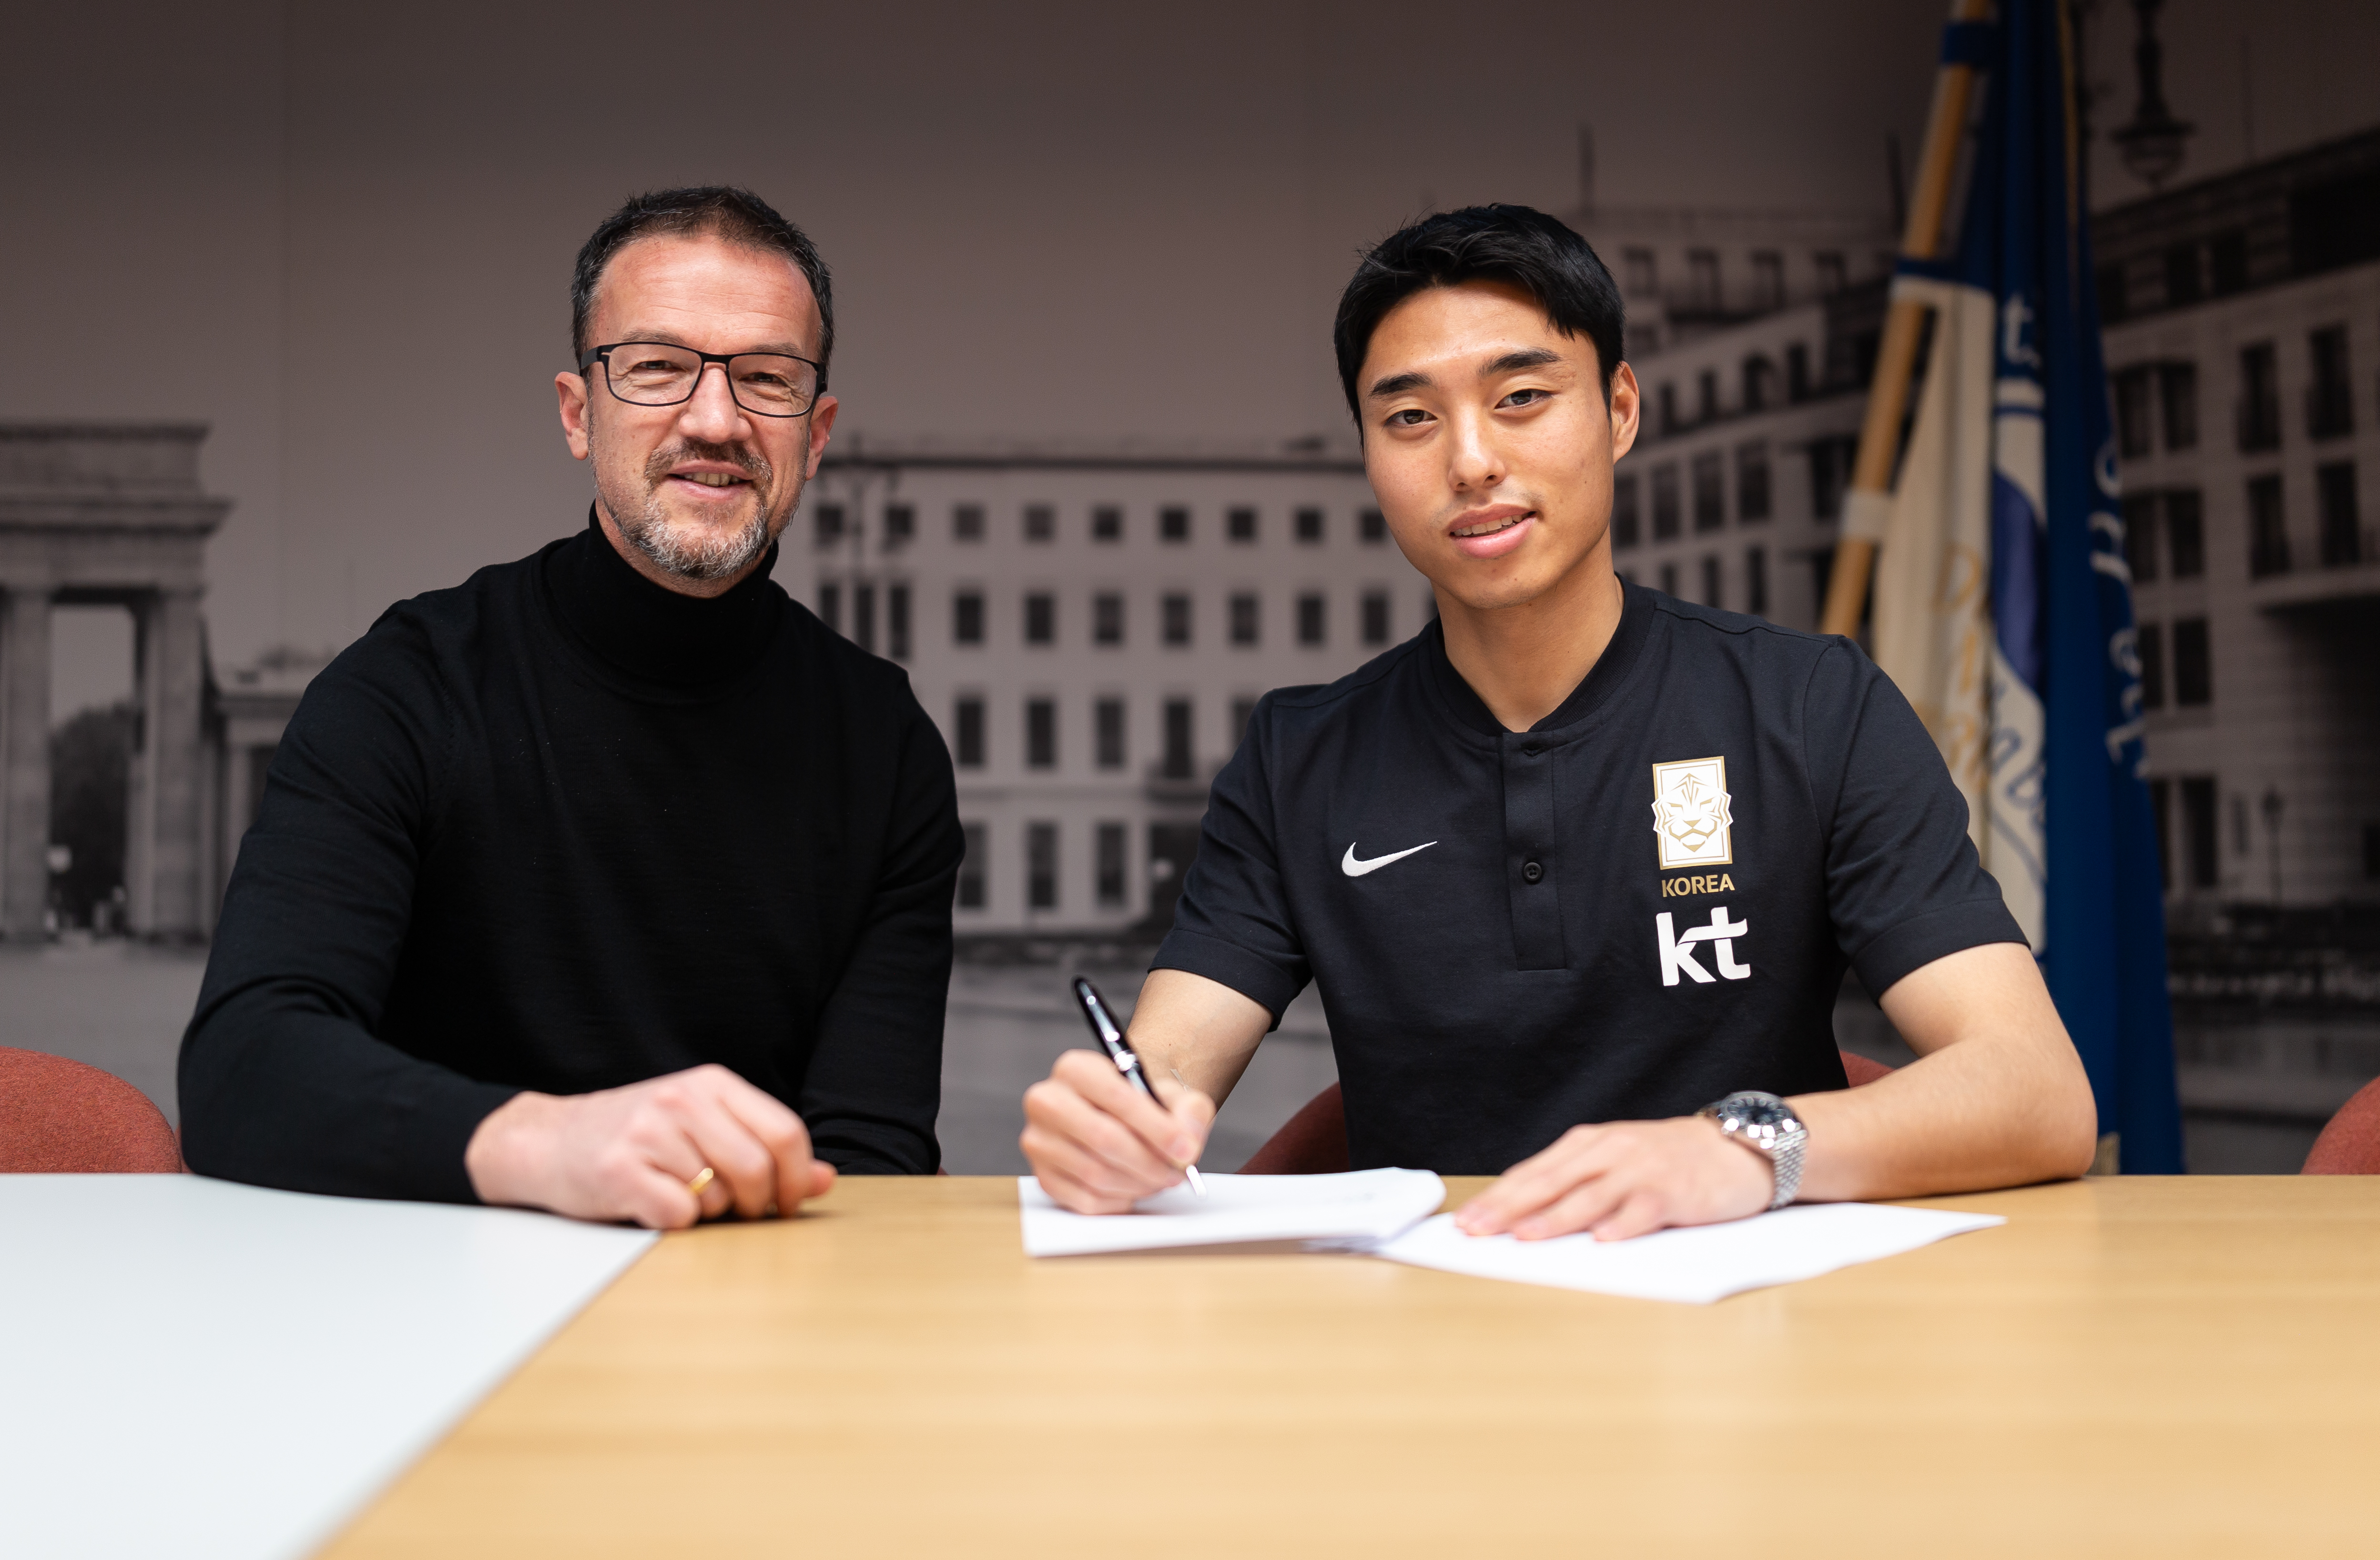 Dogjun Lee (right) signs his contract alongside Fredi Bobic.